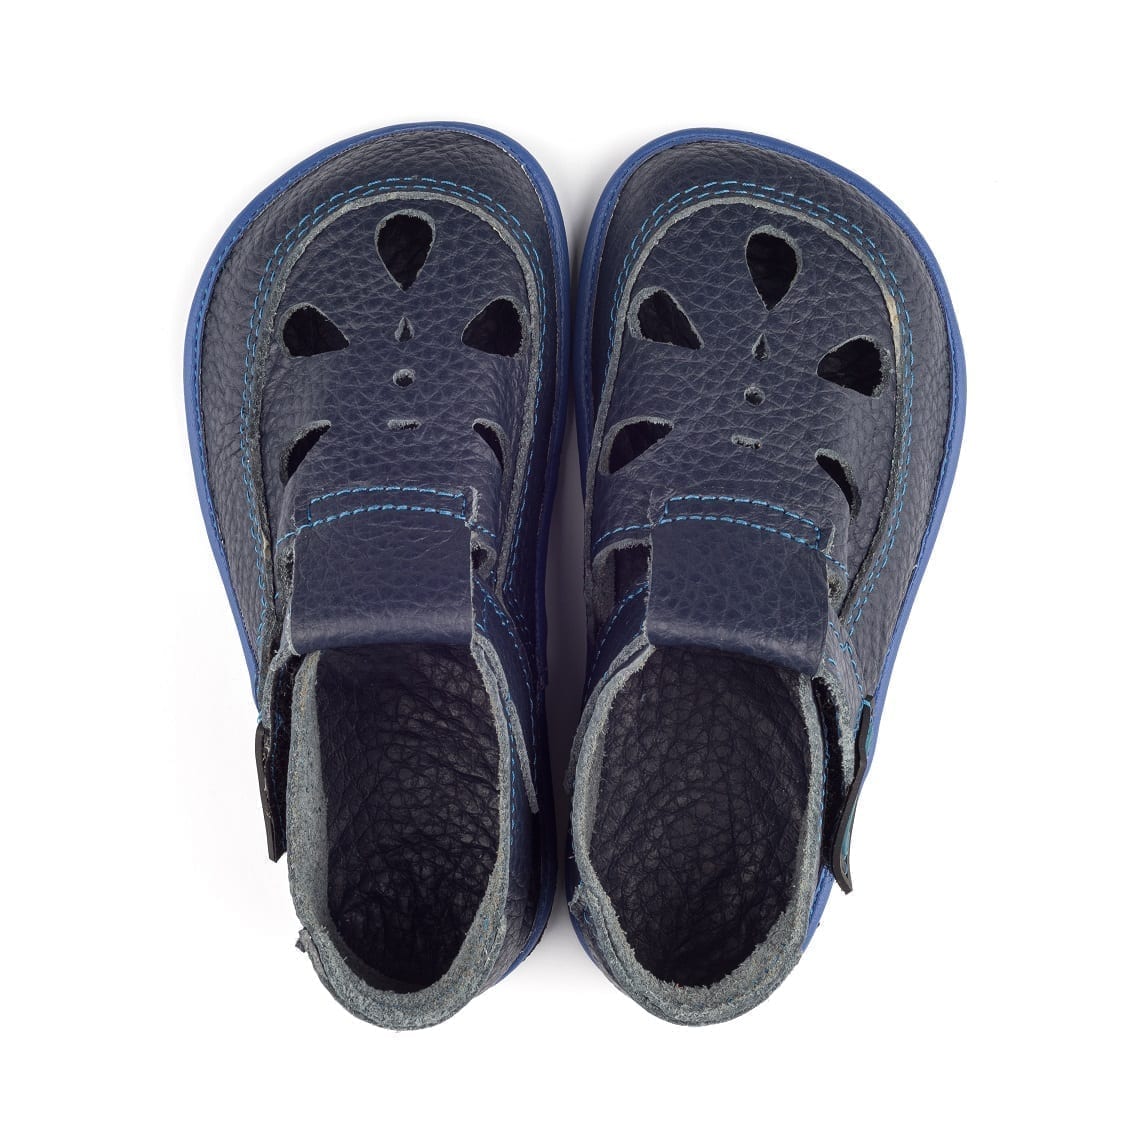 Sandalia Coco Azul Marino Magical Shoes Calzado respetuosos, barefoot o minimalista